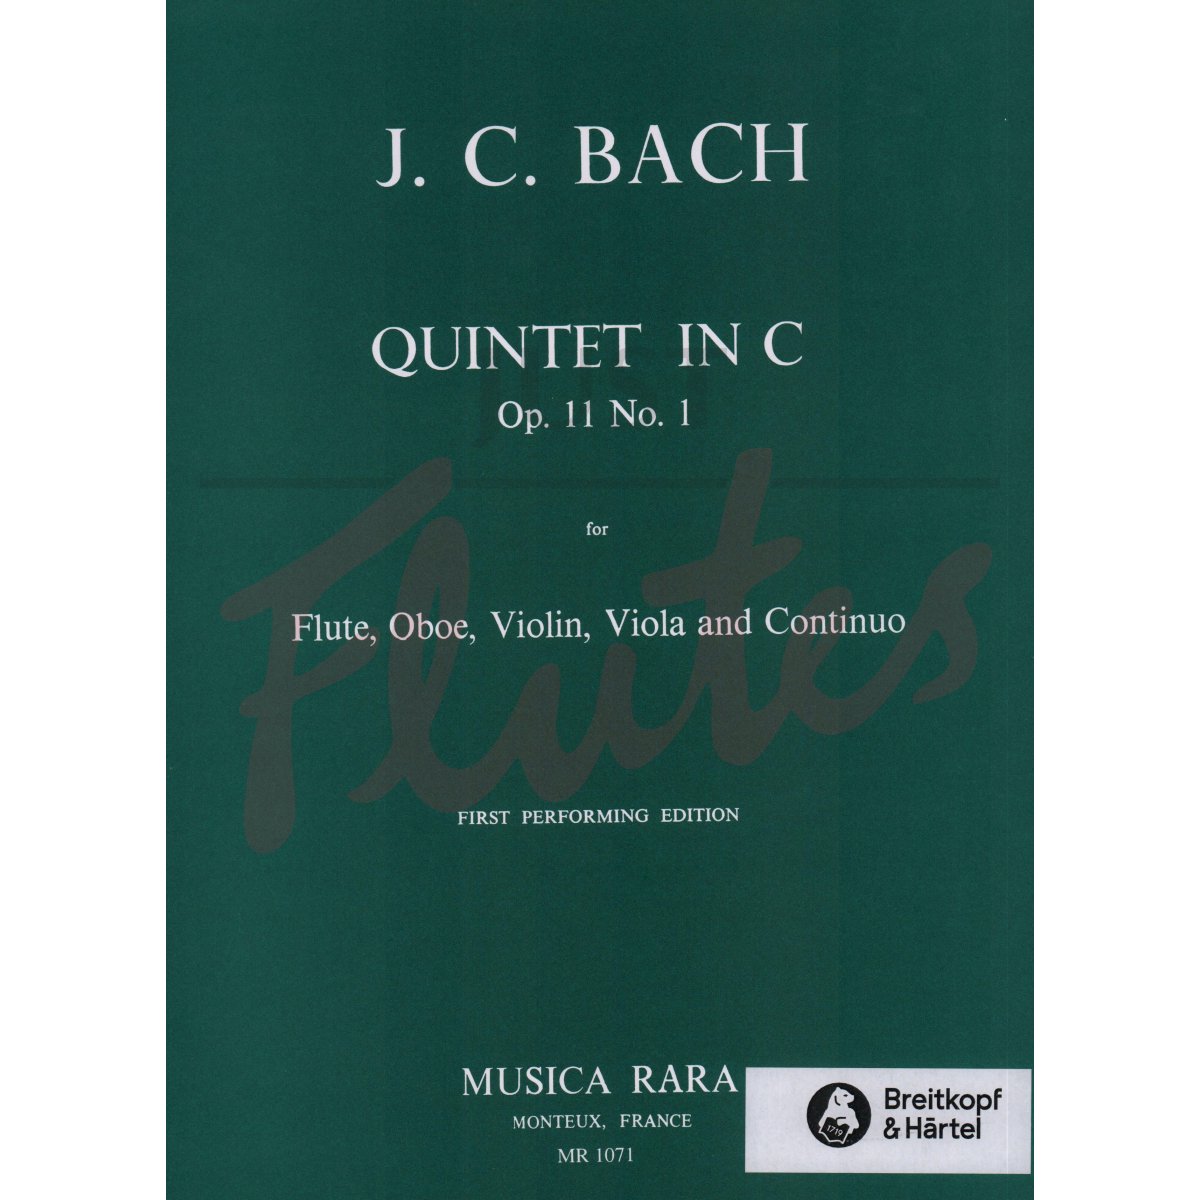 Quintet in C for Flute, Oboe, Violin, Viola and Continuo